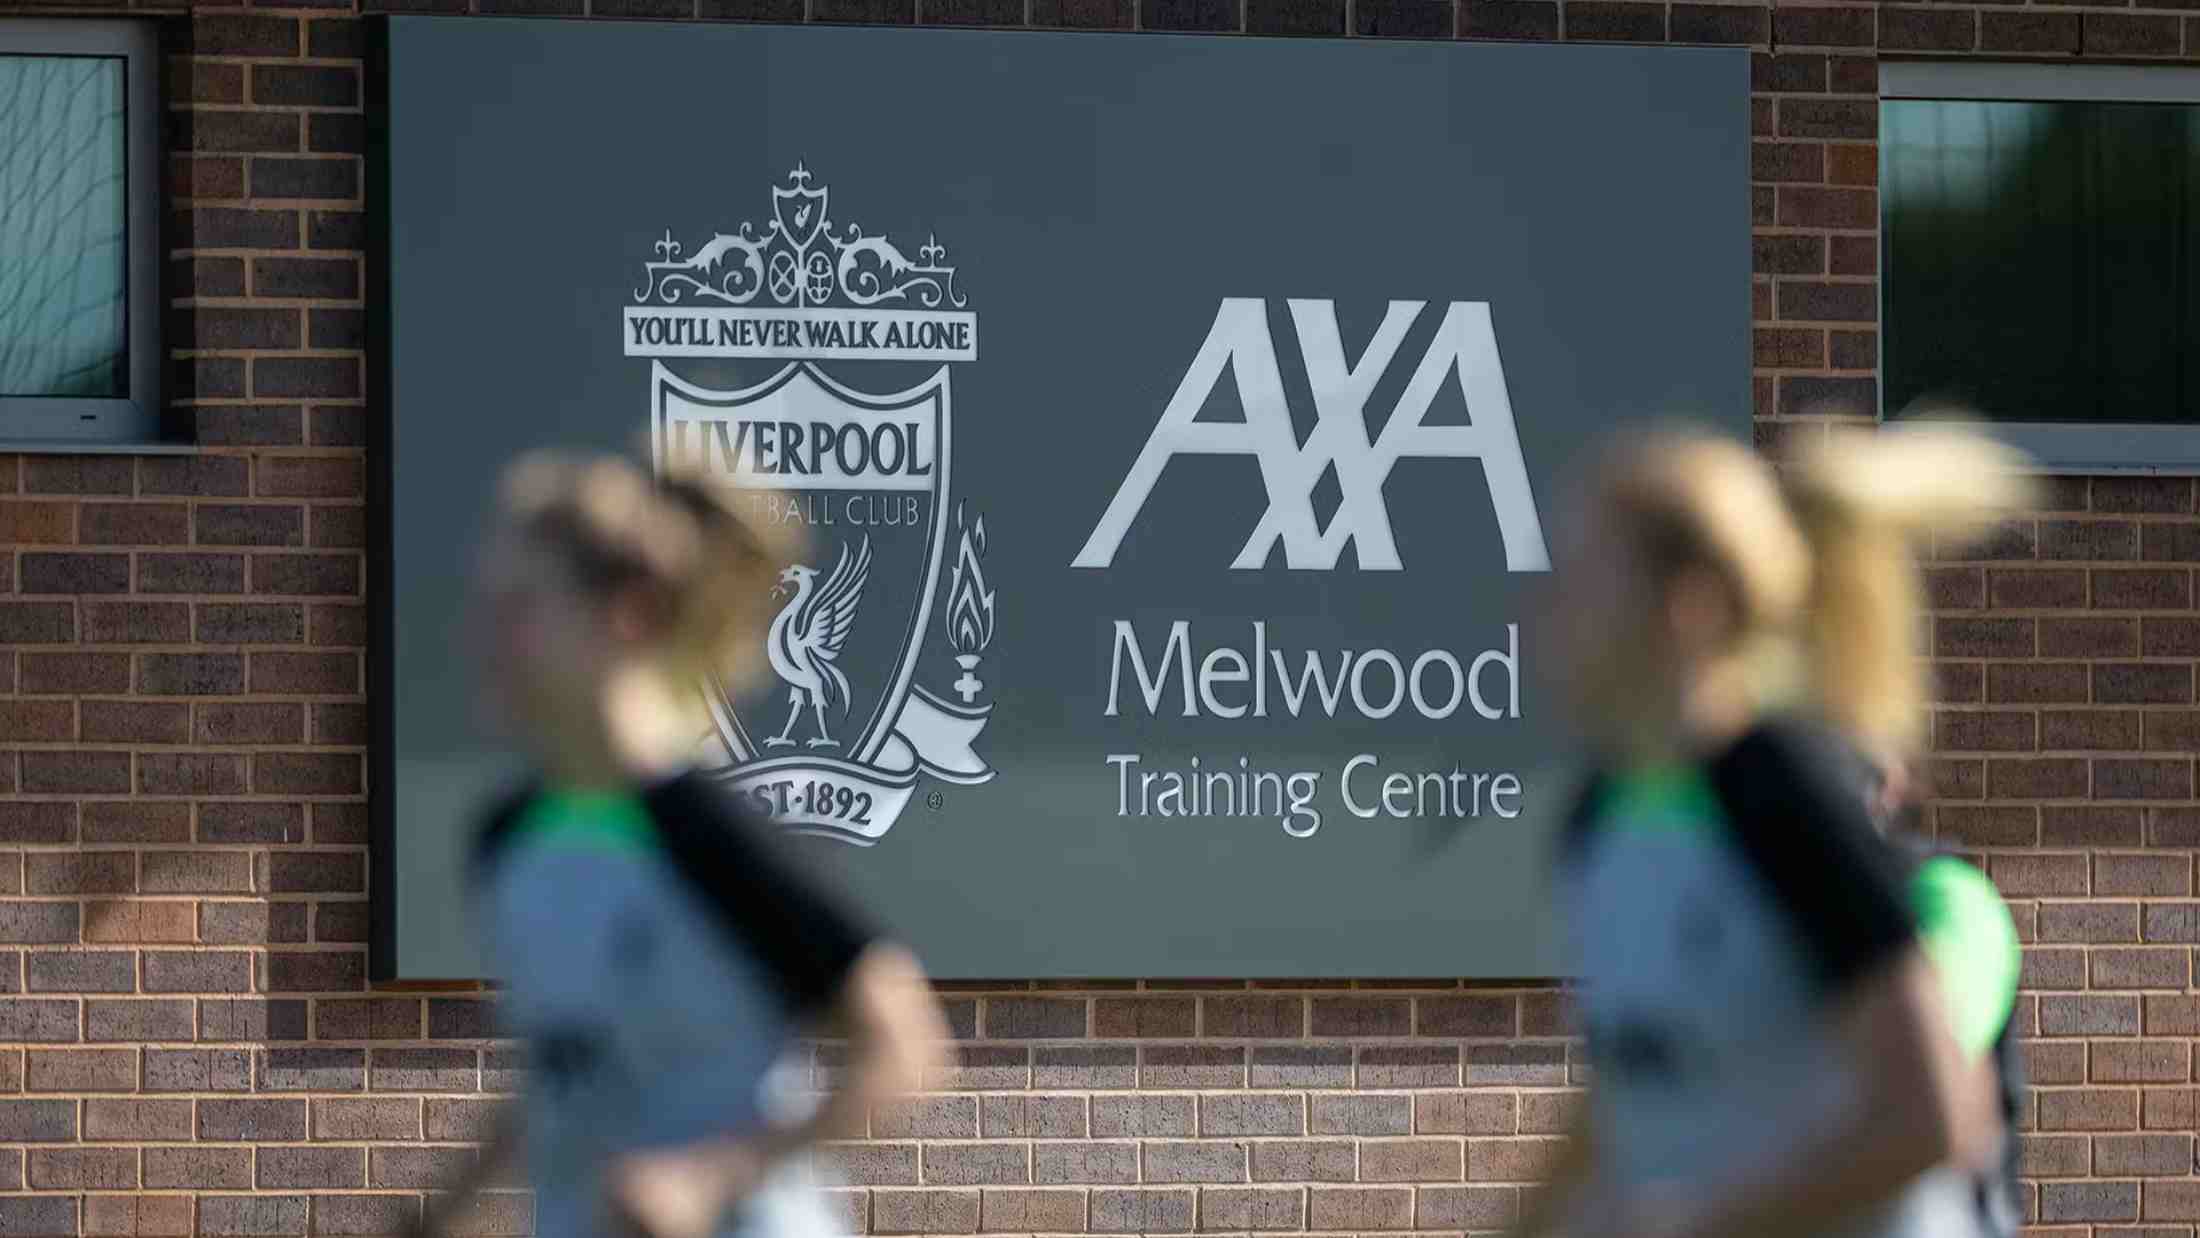 Entrance of Liverpool - AXA Melwood training centre